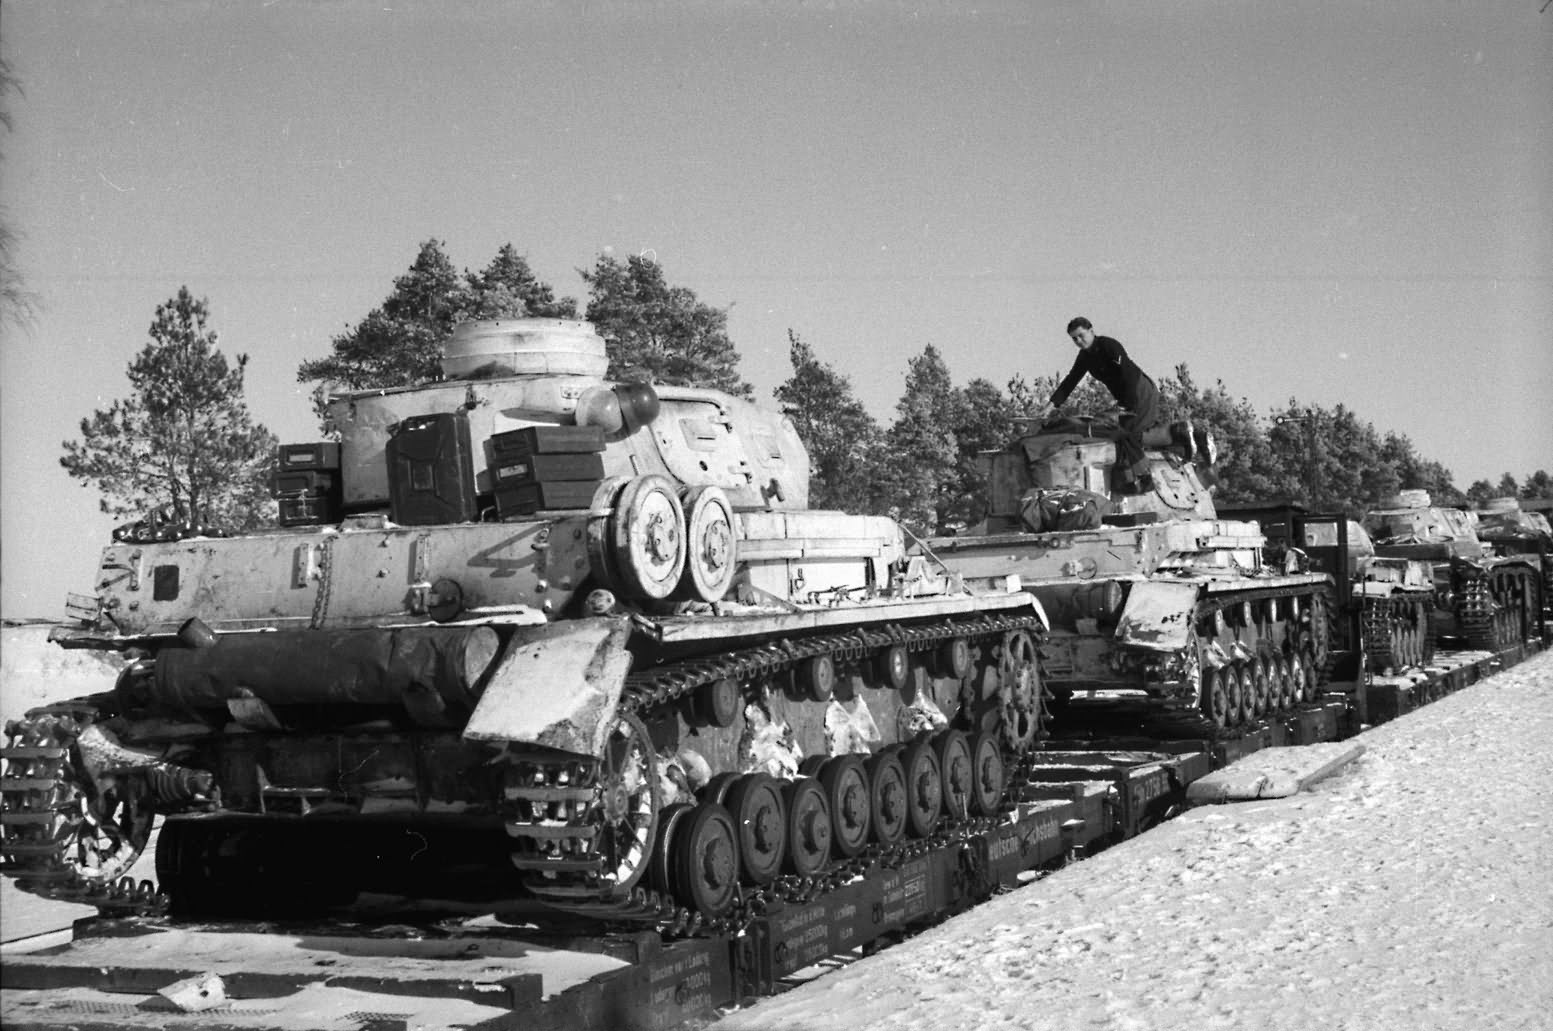 Panzer IV Backgrounds, Compatible - PC, Mobile, Gadgets| 1553x1031 px